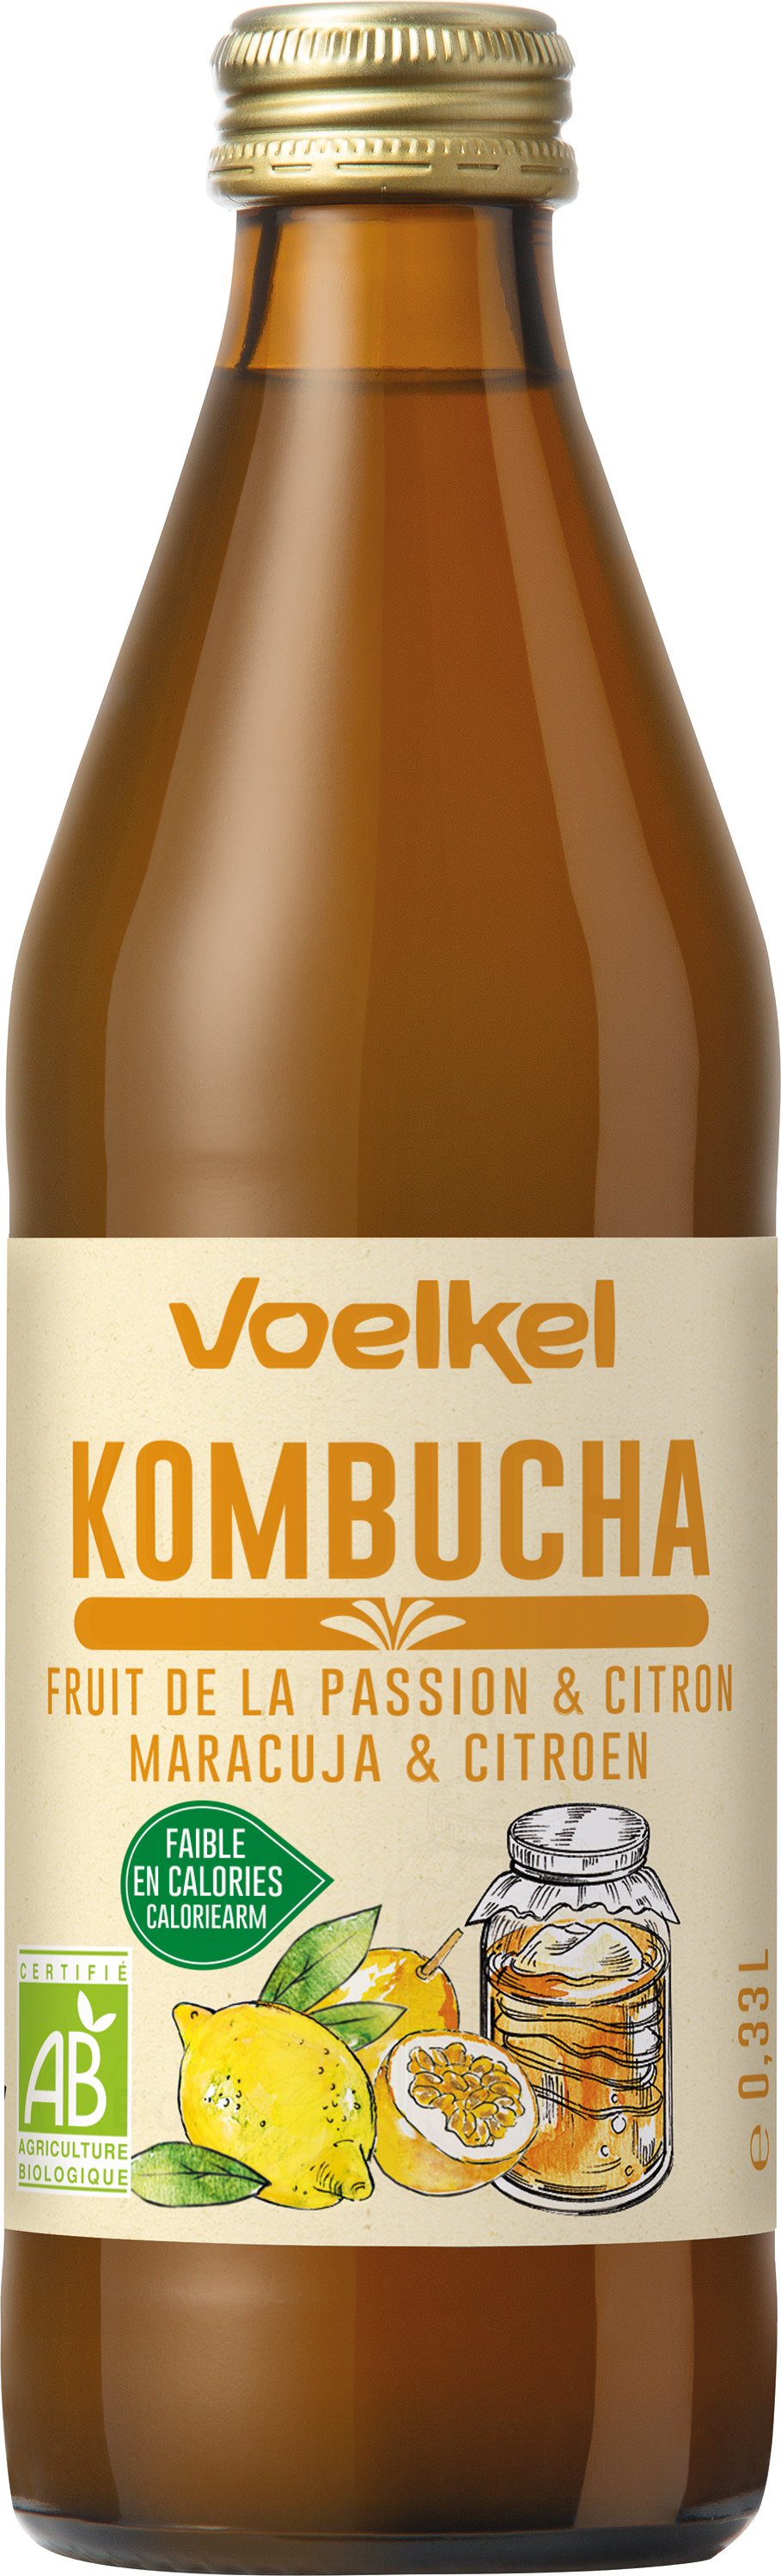 Voelkel Kombucha fruit de la passion & citron bio 330ml